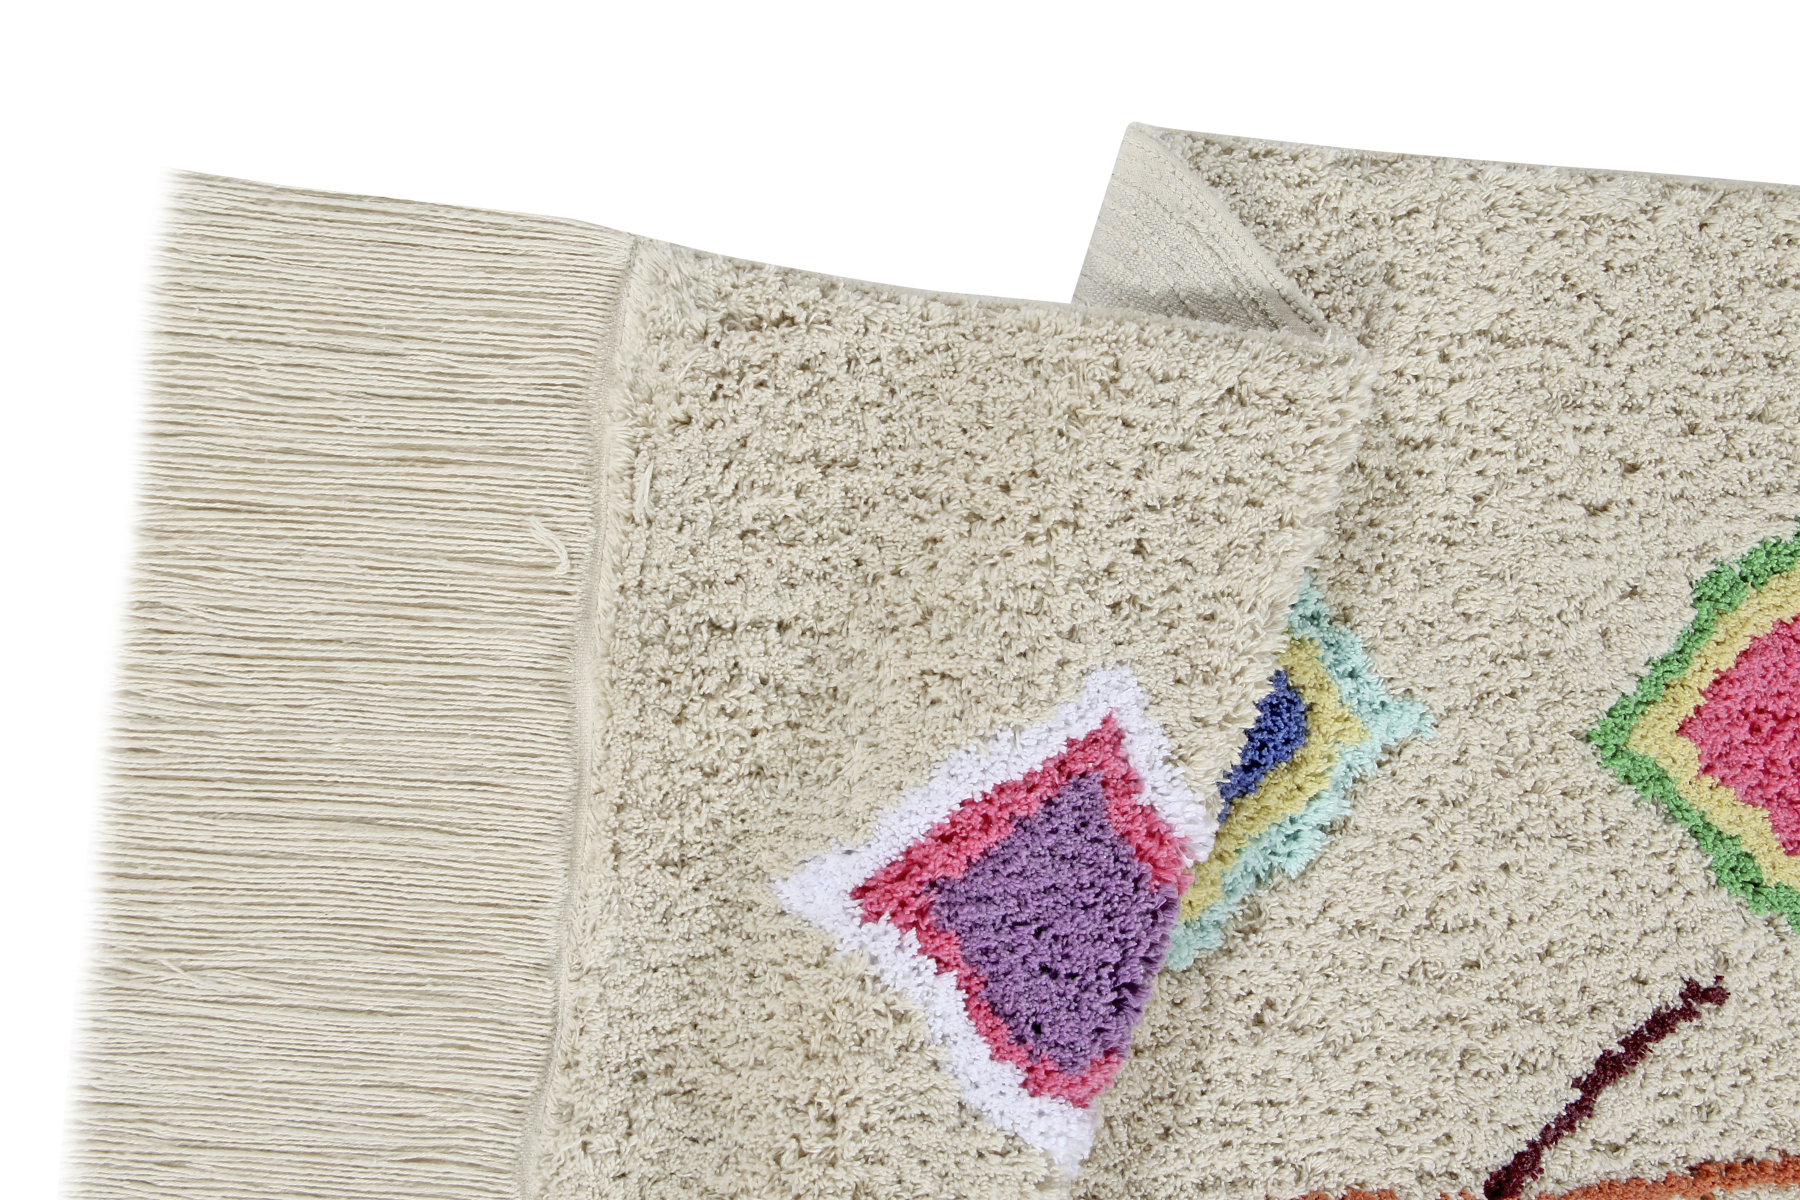 Multicolour Moroccan Cotton Rug
